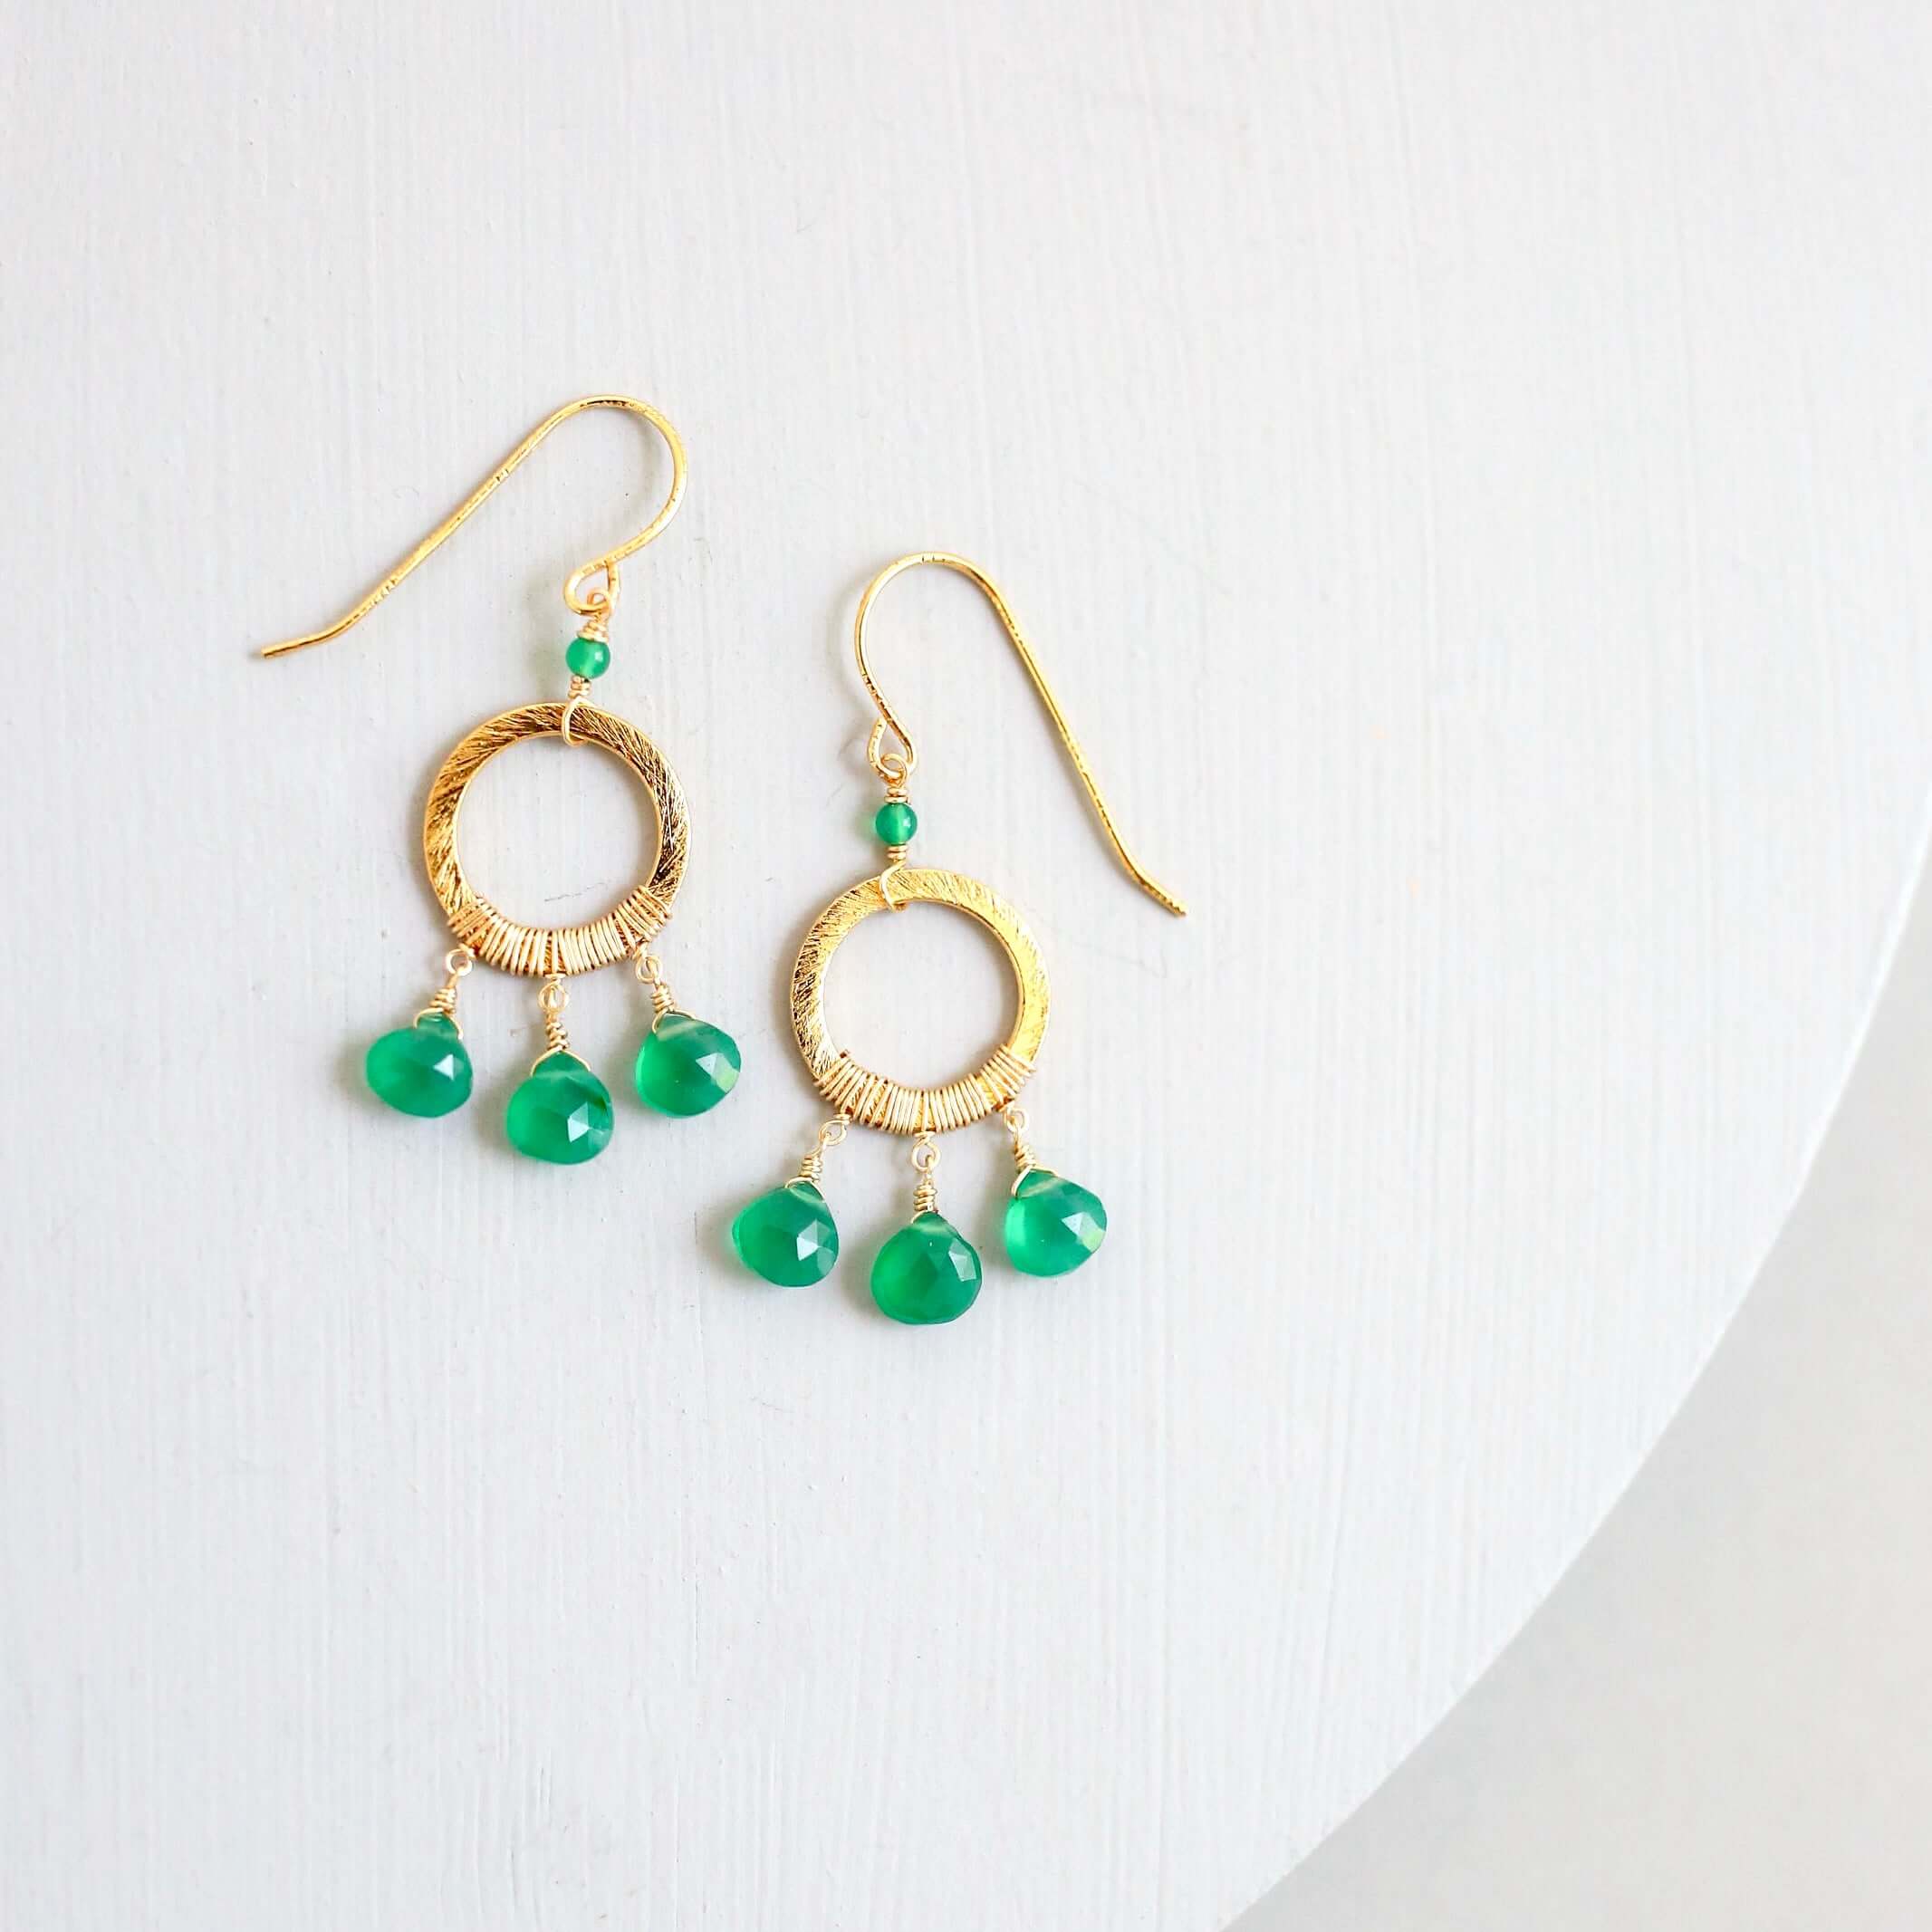 Boho Mini Dream Catcher Earrings with Green Onyx Gemstones